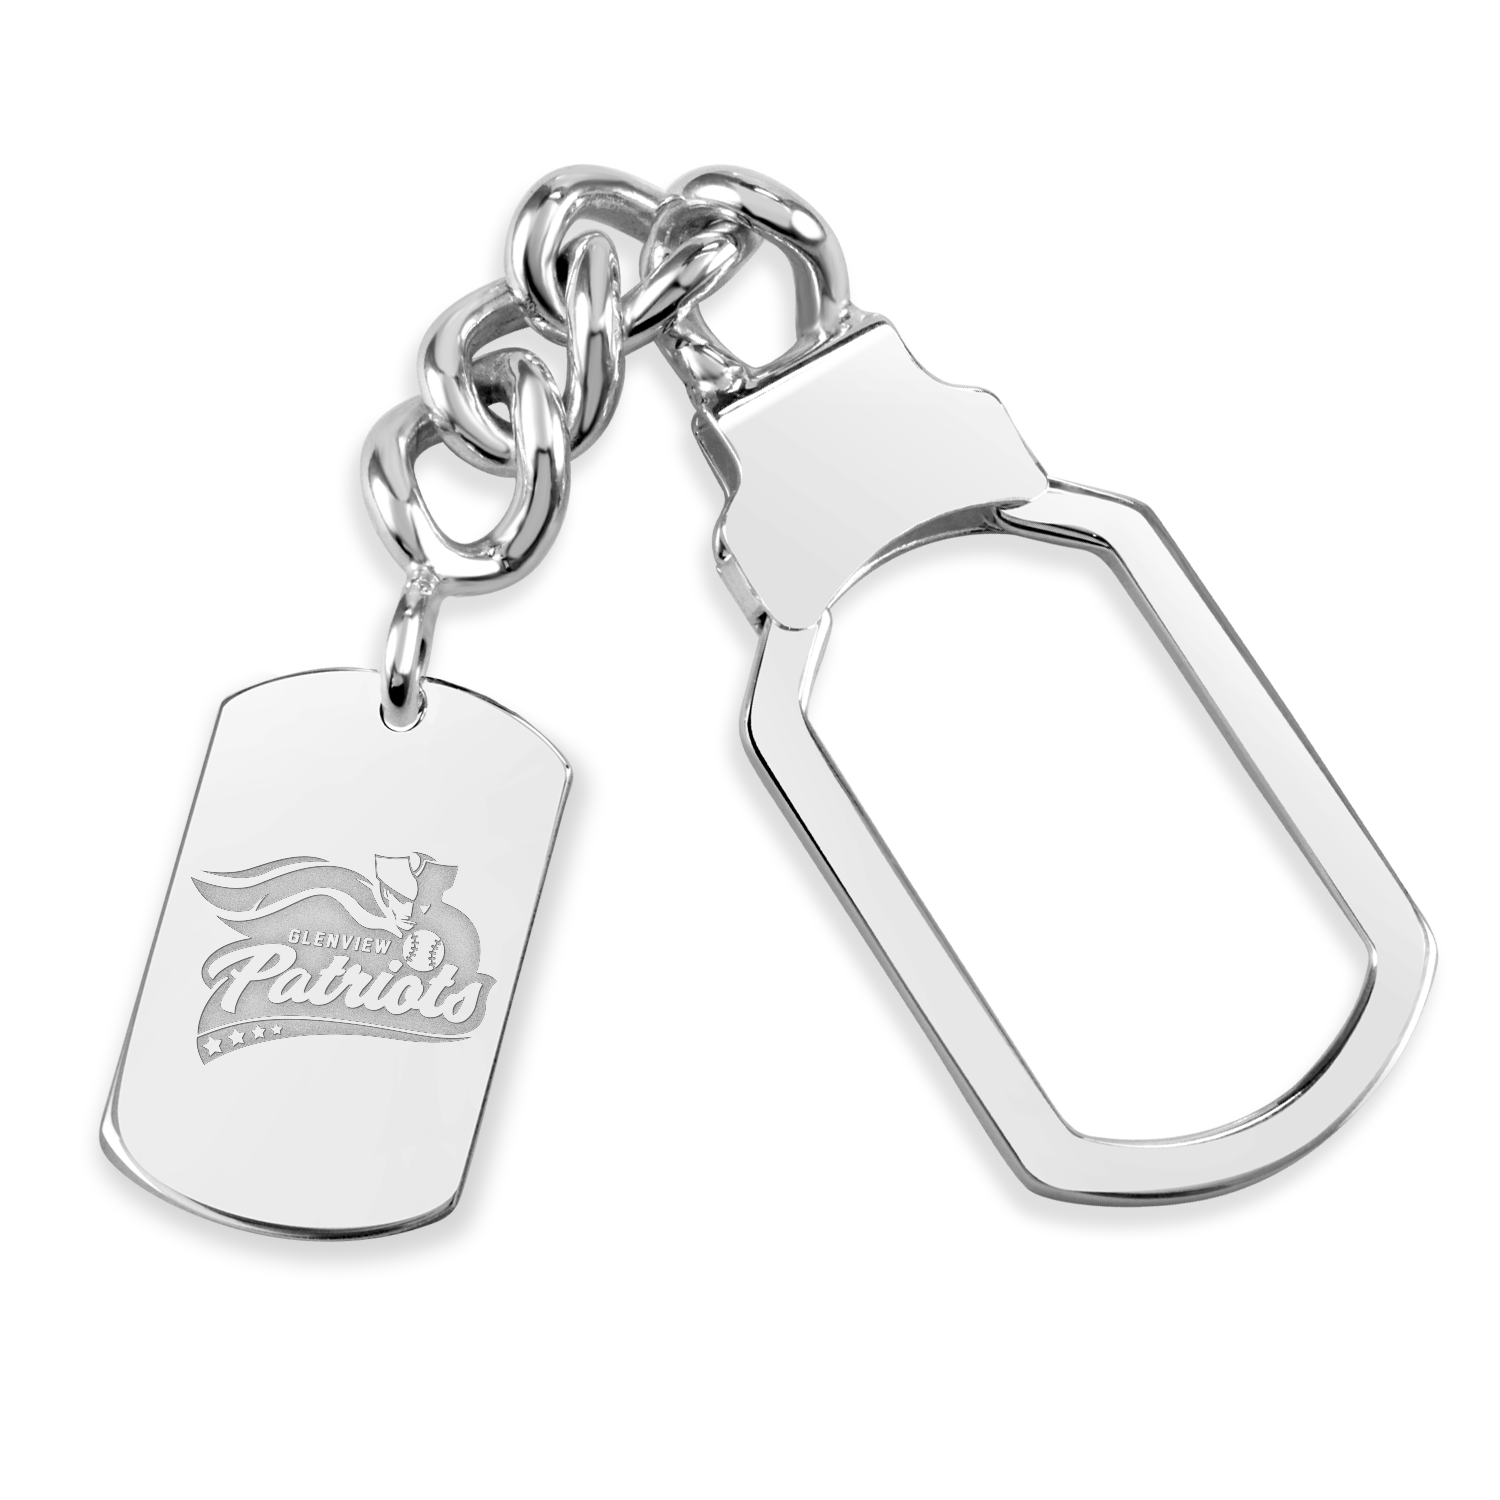 Glenview Patriots Tension Lock Key Chain Tag